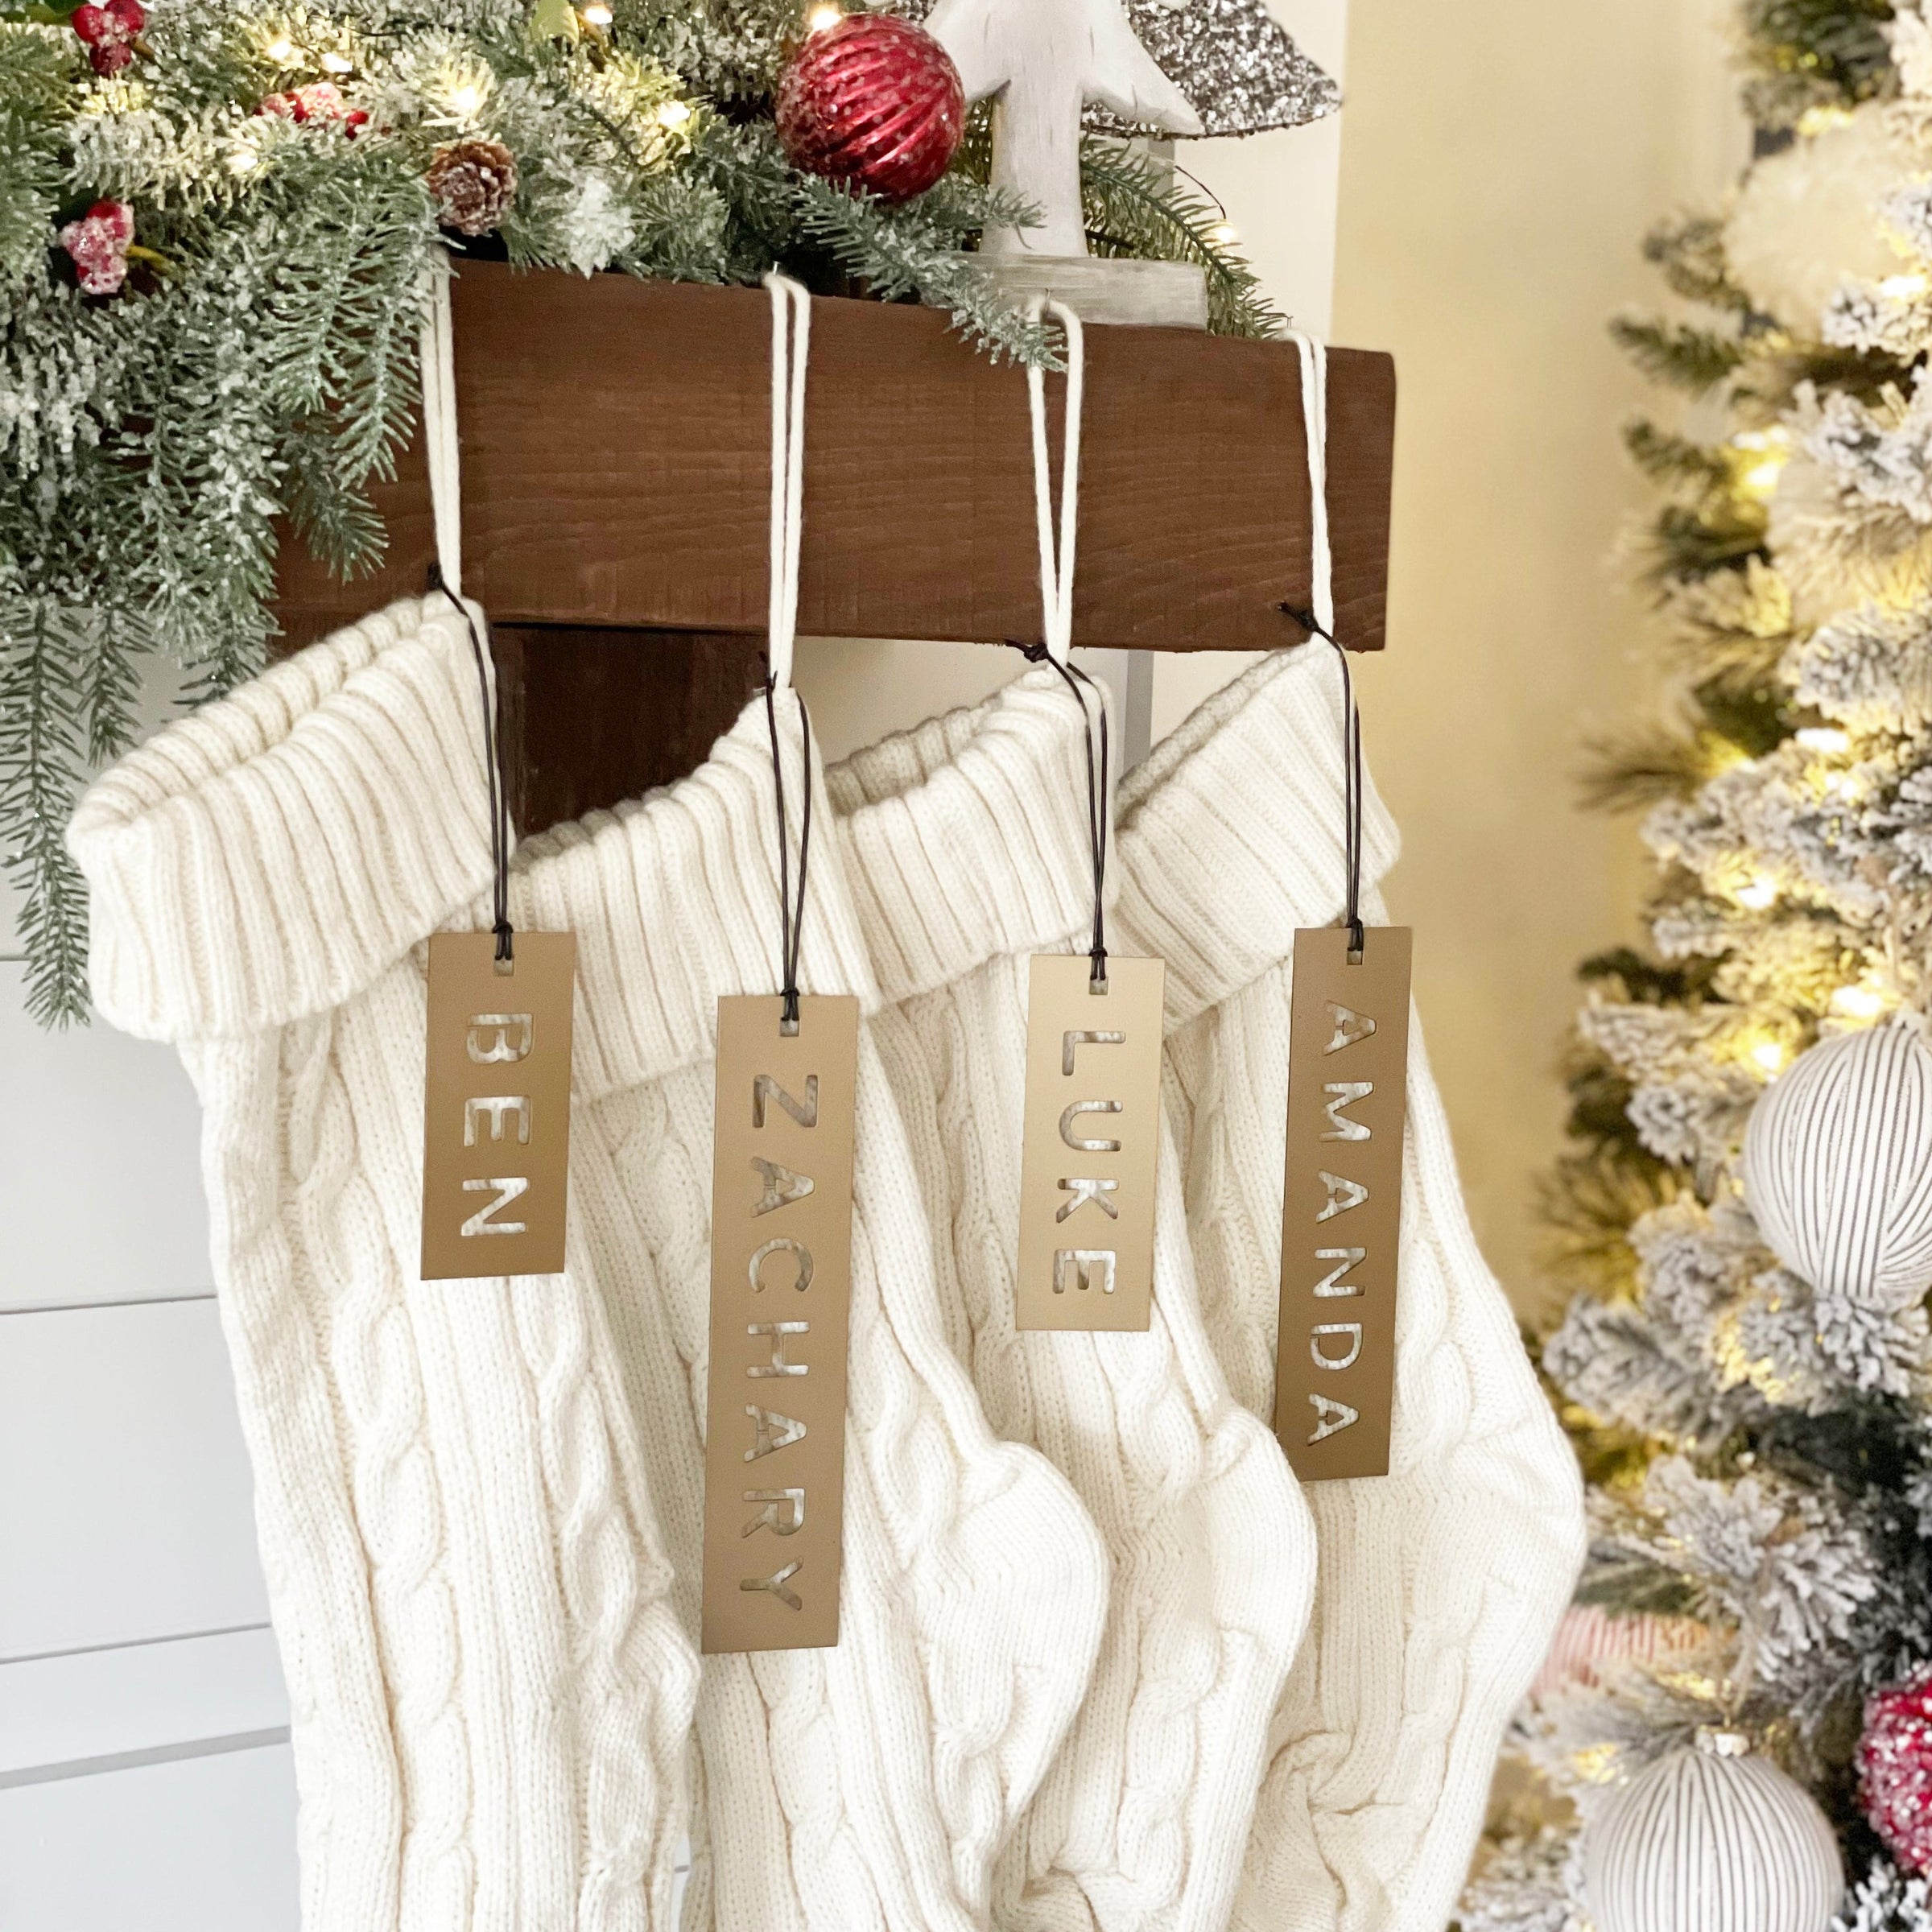 Stocking Name Tags, Personalized Stocking Tags, Christmas Stocking